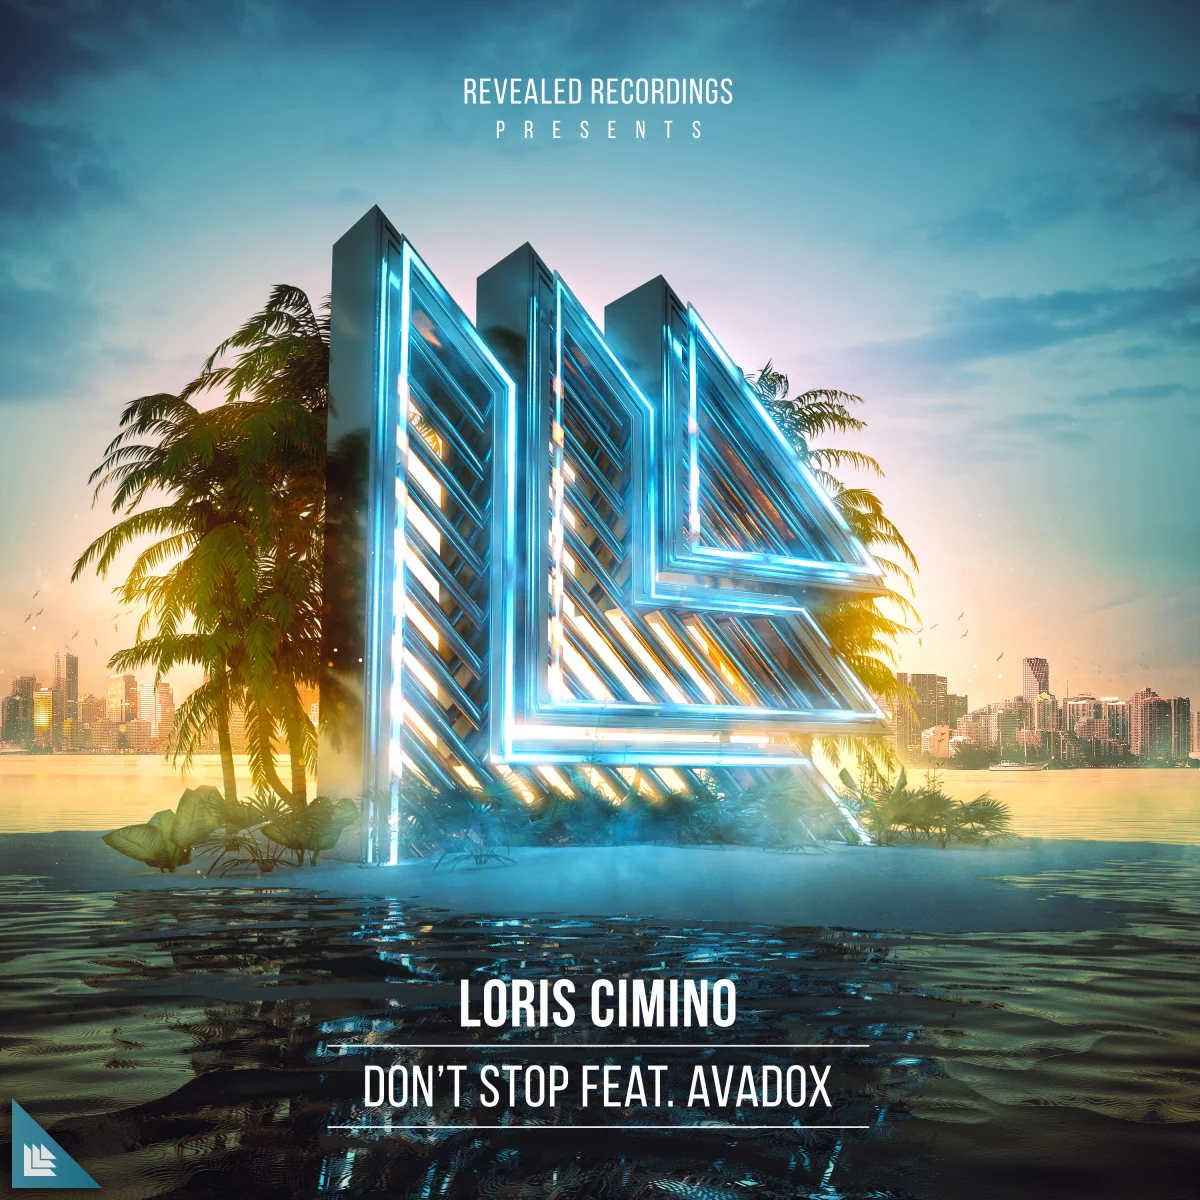 Don't Stop - Loris Cimino⁠ feat. Avadox⁠ 